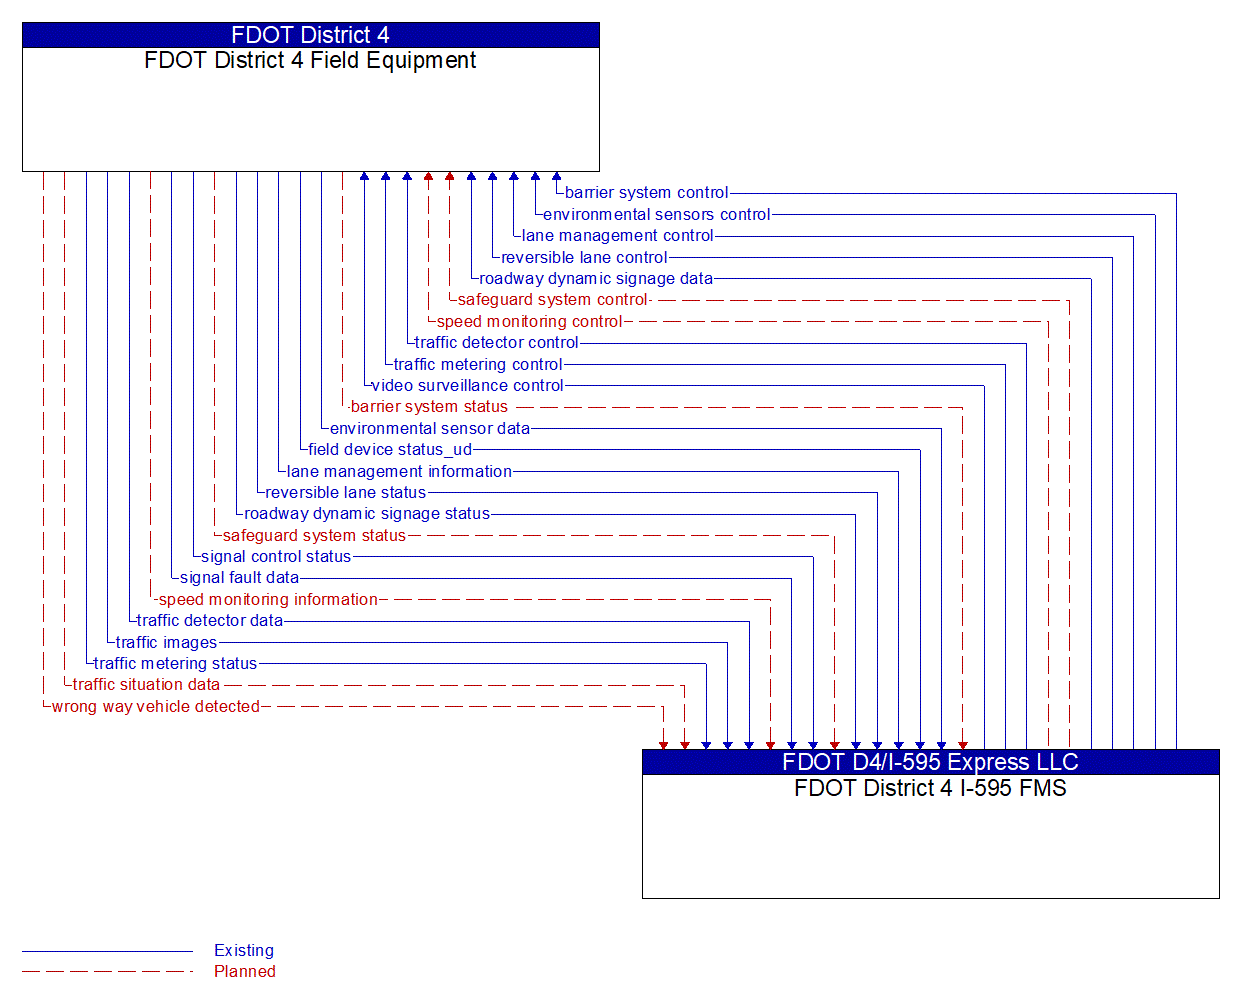 Architecture Flow Diagram: FDOT District 4 I-595 FMS <--> FDOT District 4 Field Equipment